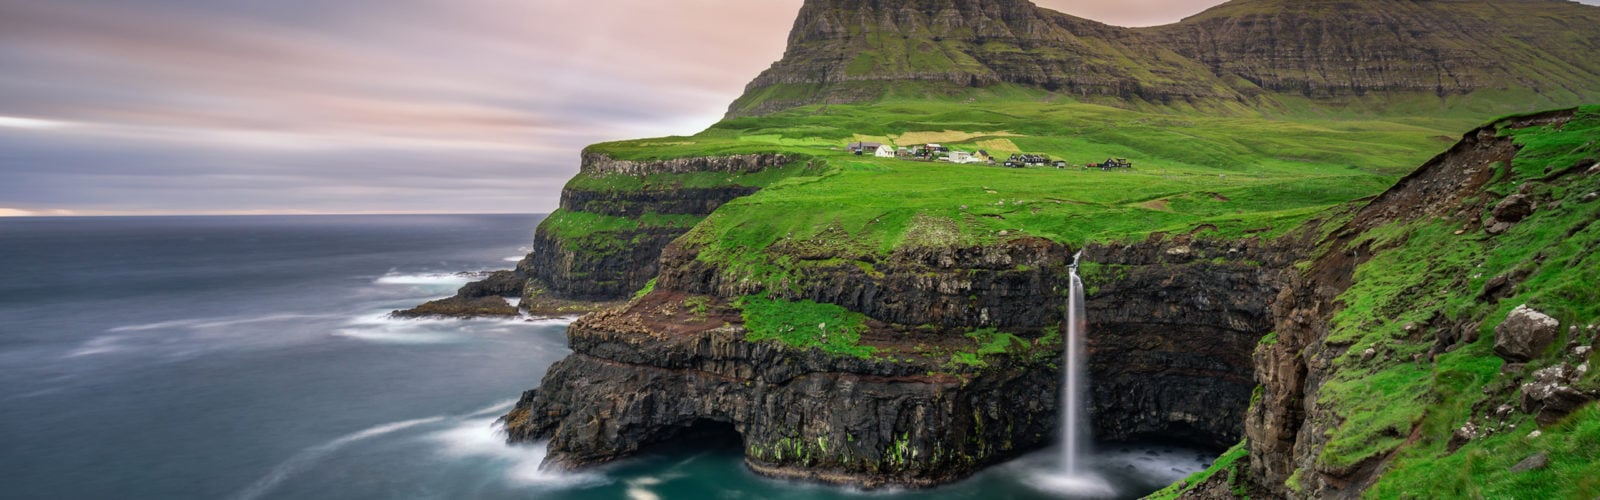 Luxury Faroe Islands Tours, Private & Tailor-made | Jacada Travel